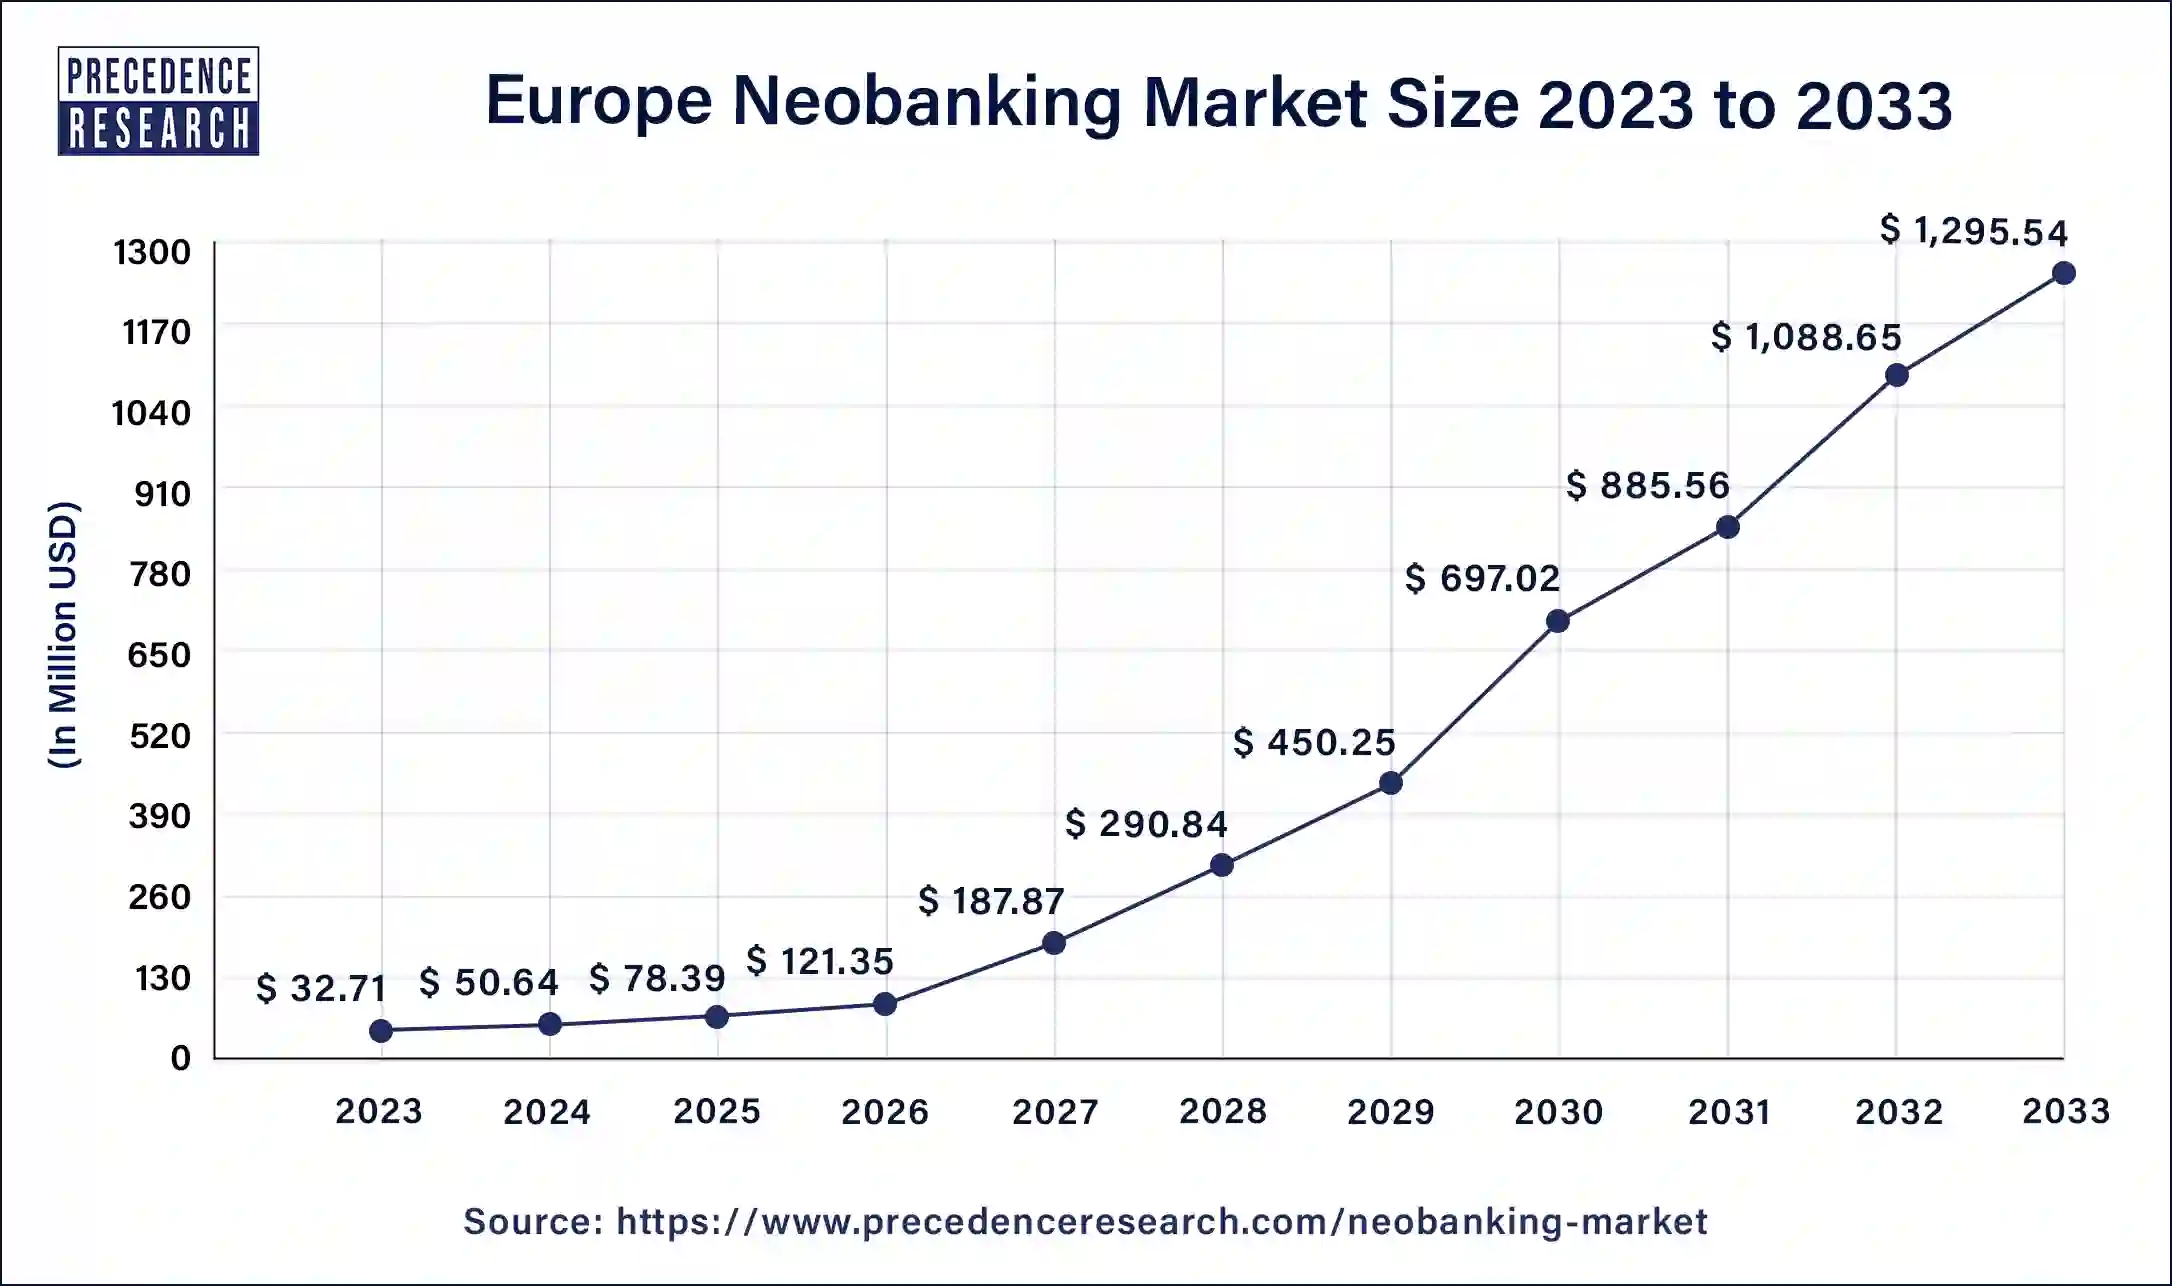 Europe Neobanking Market Size 2024 to 2033